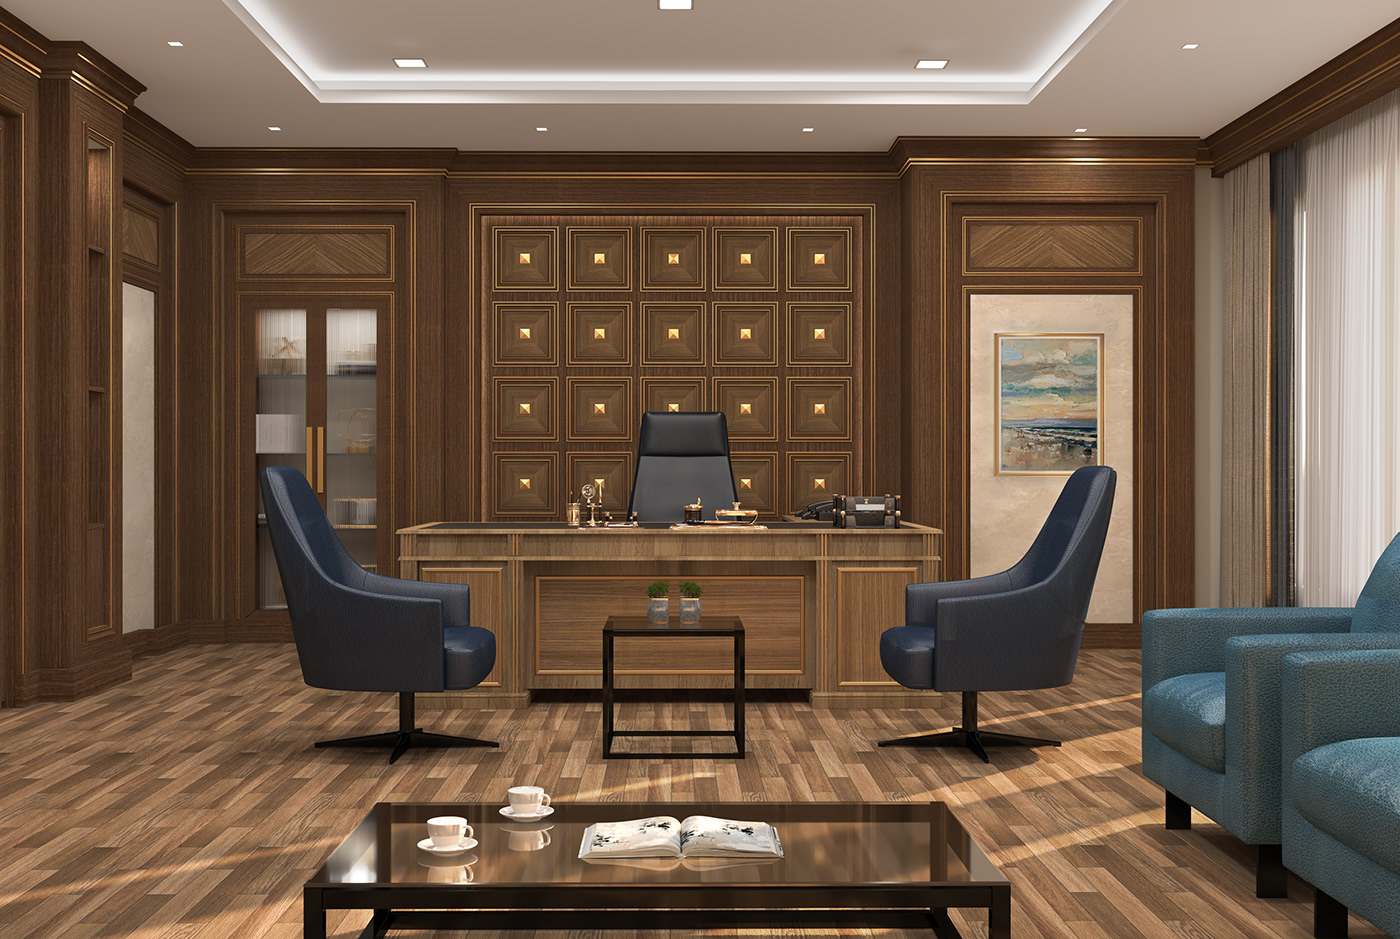 Interior Render interior design  vray 3ds max Classic woodworking furniture design 